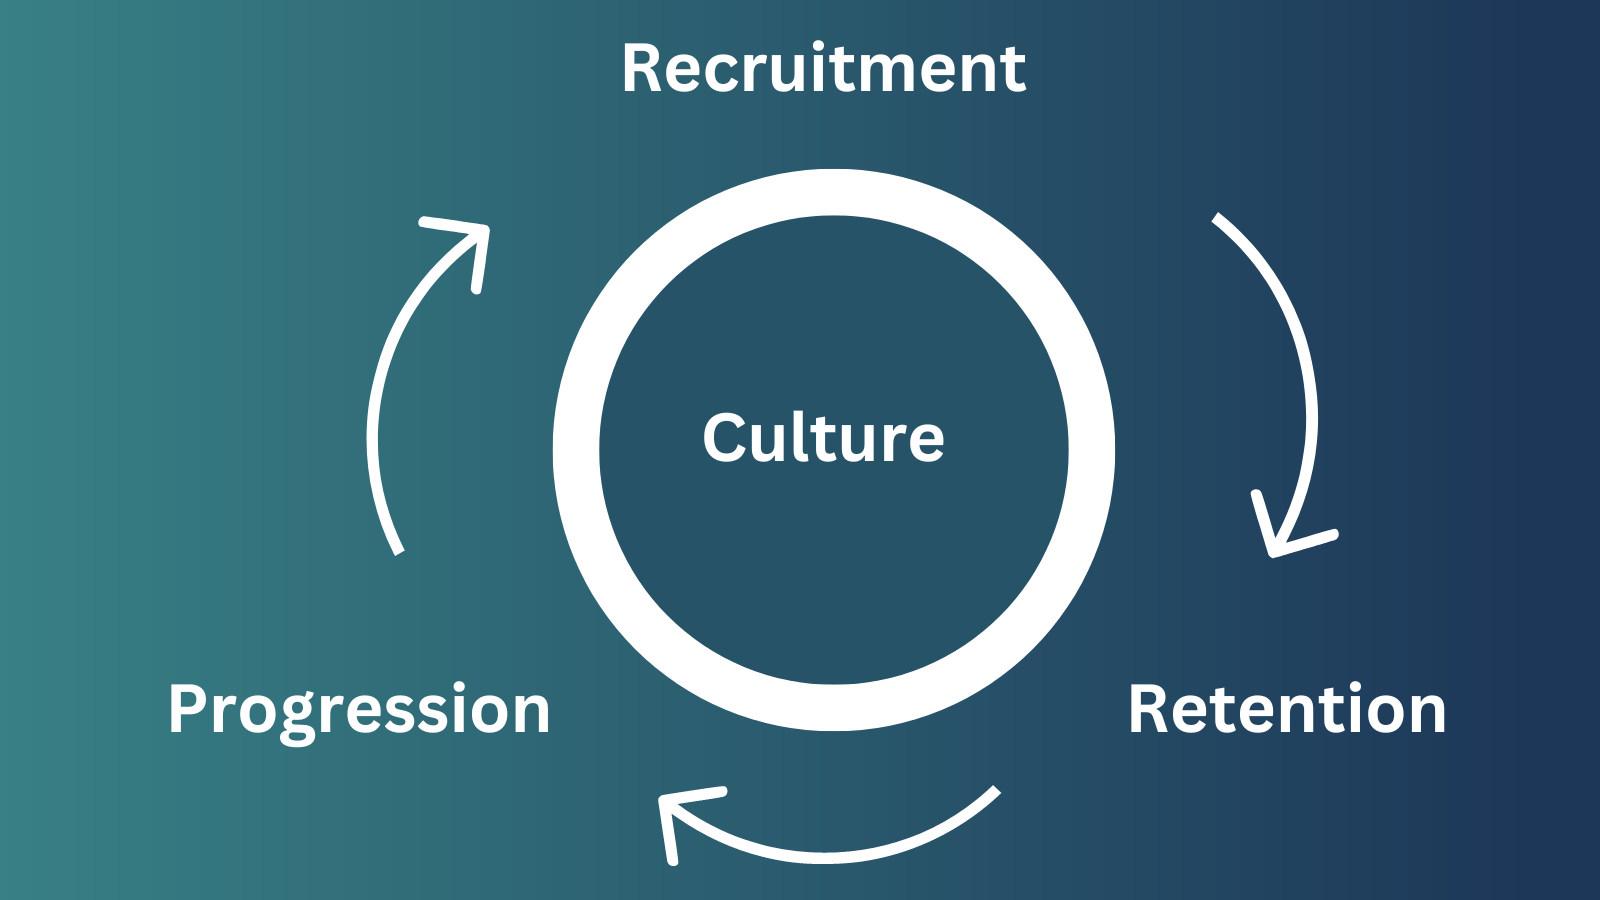 The gender diversity triangle: recruitment, retention and progression